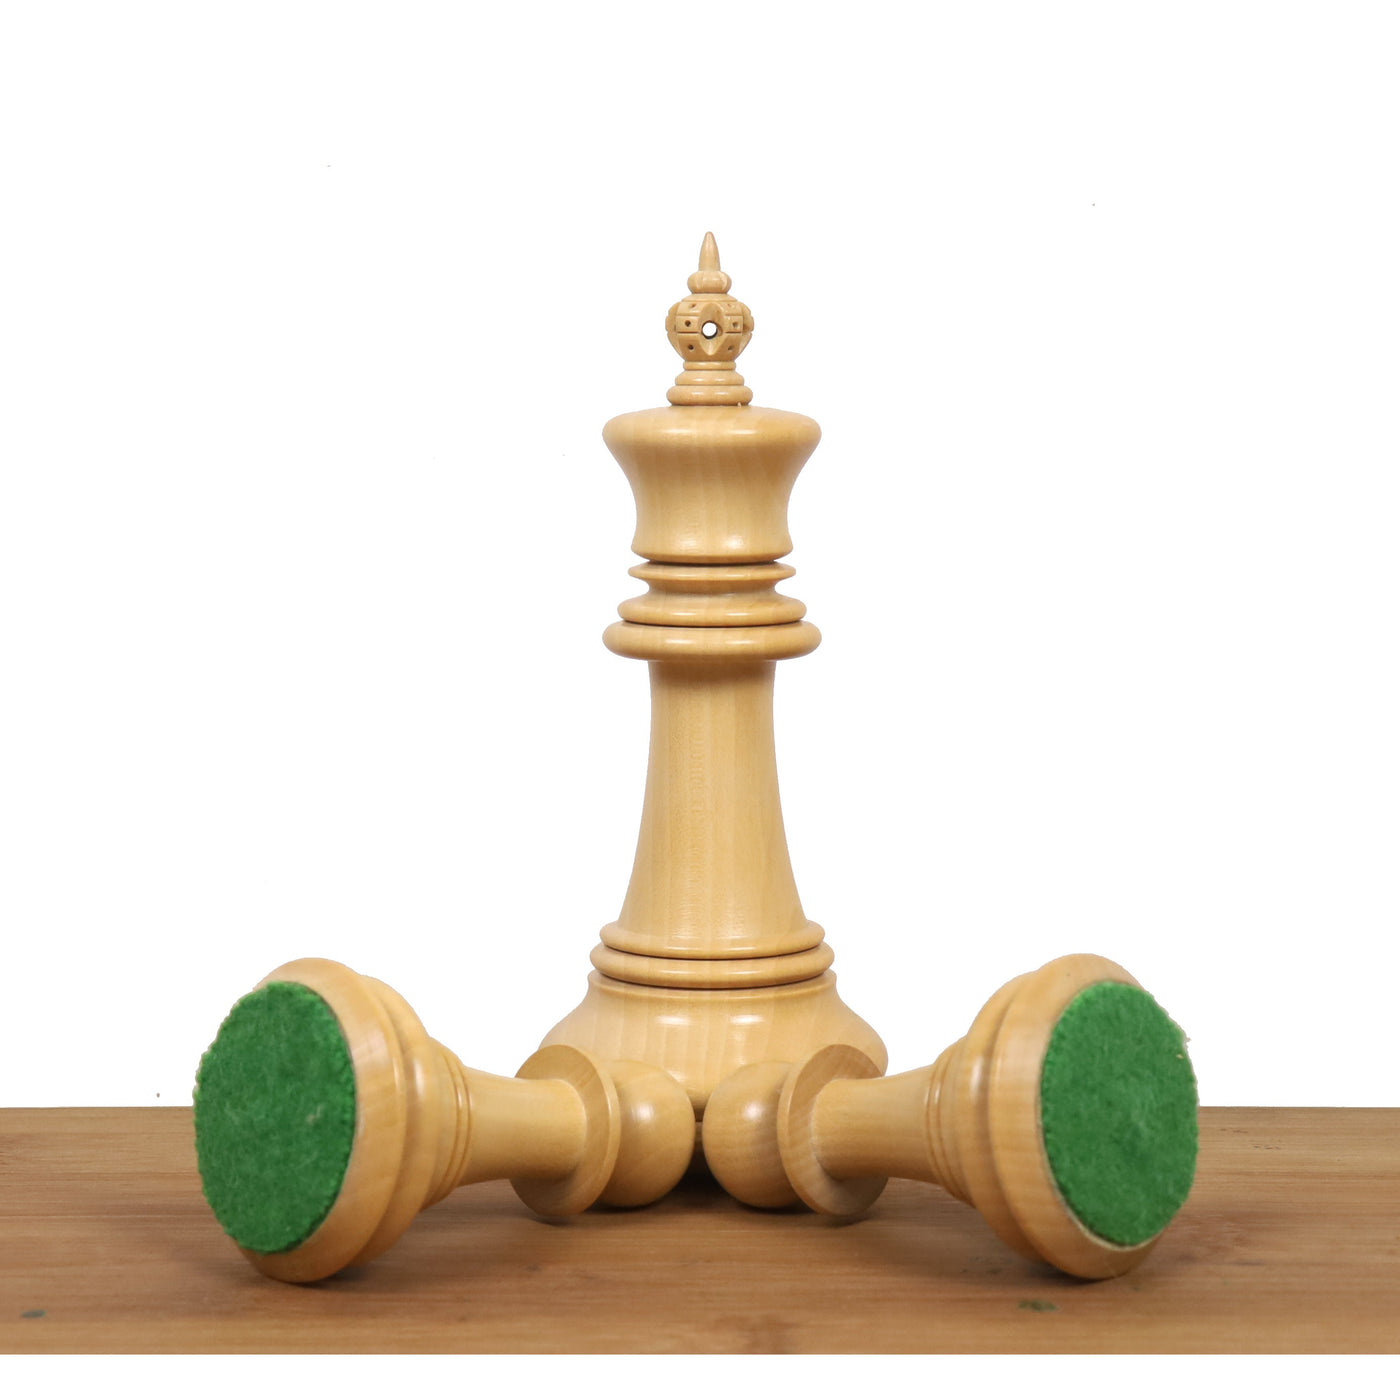 4.6" Spartacus Luxury Staunton Ebony Wood Chess Pieces with 23" Ebony & Maple Wood Chessboard - Sheesham borders - Matt Finish and Leatherette Coffer Storage Box